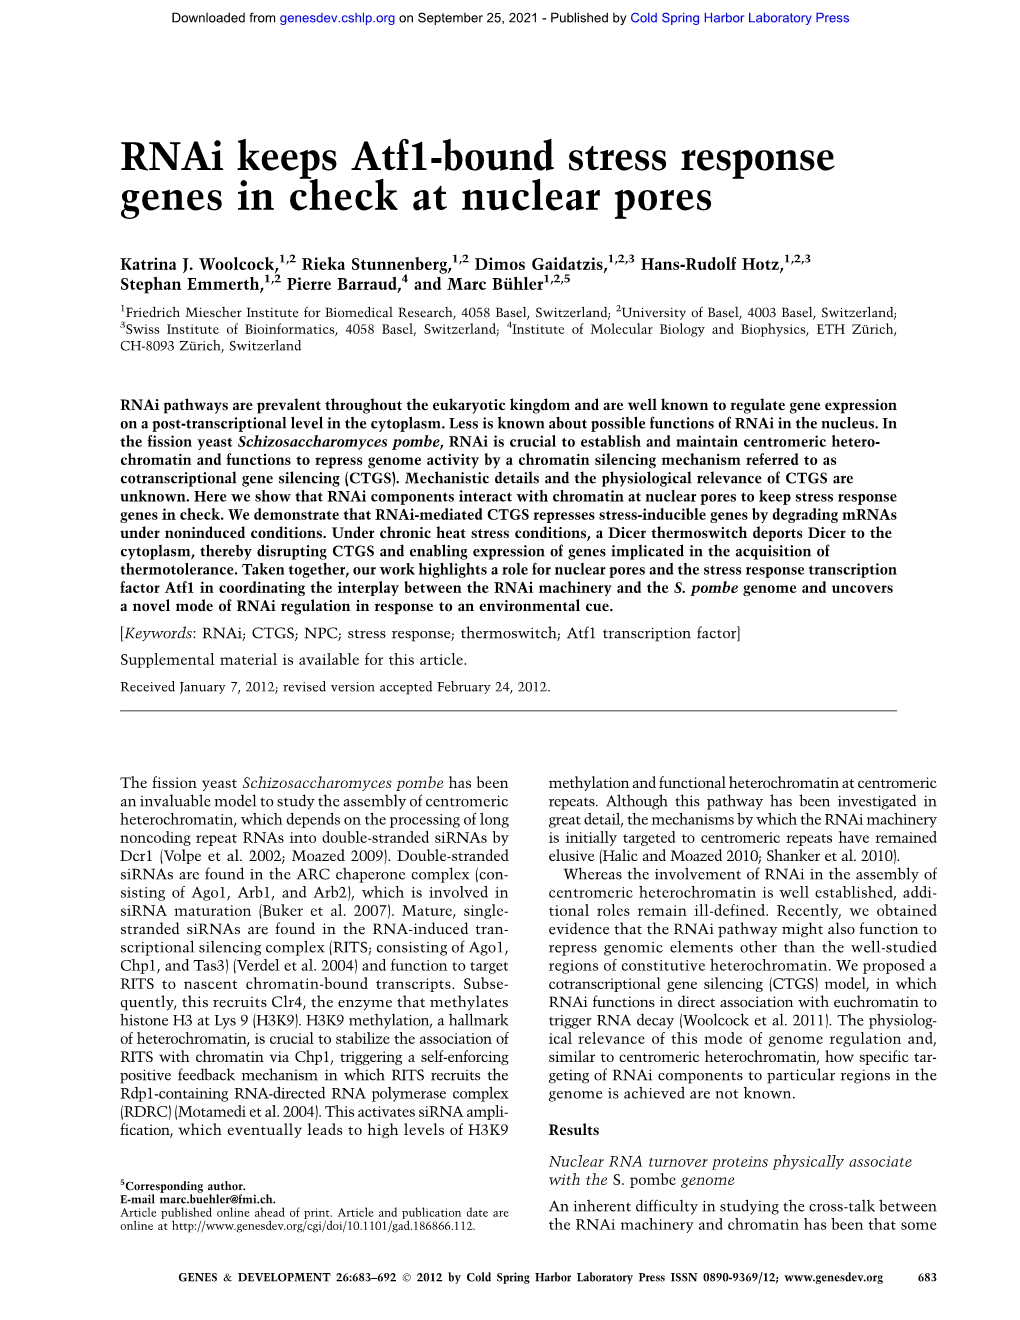 Rnai Keeps Atf1-Bound Stress Response Genes in Check at Nuclear Pores